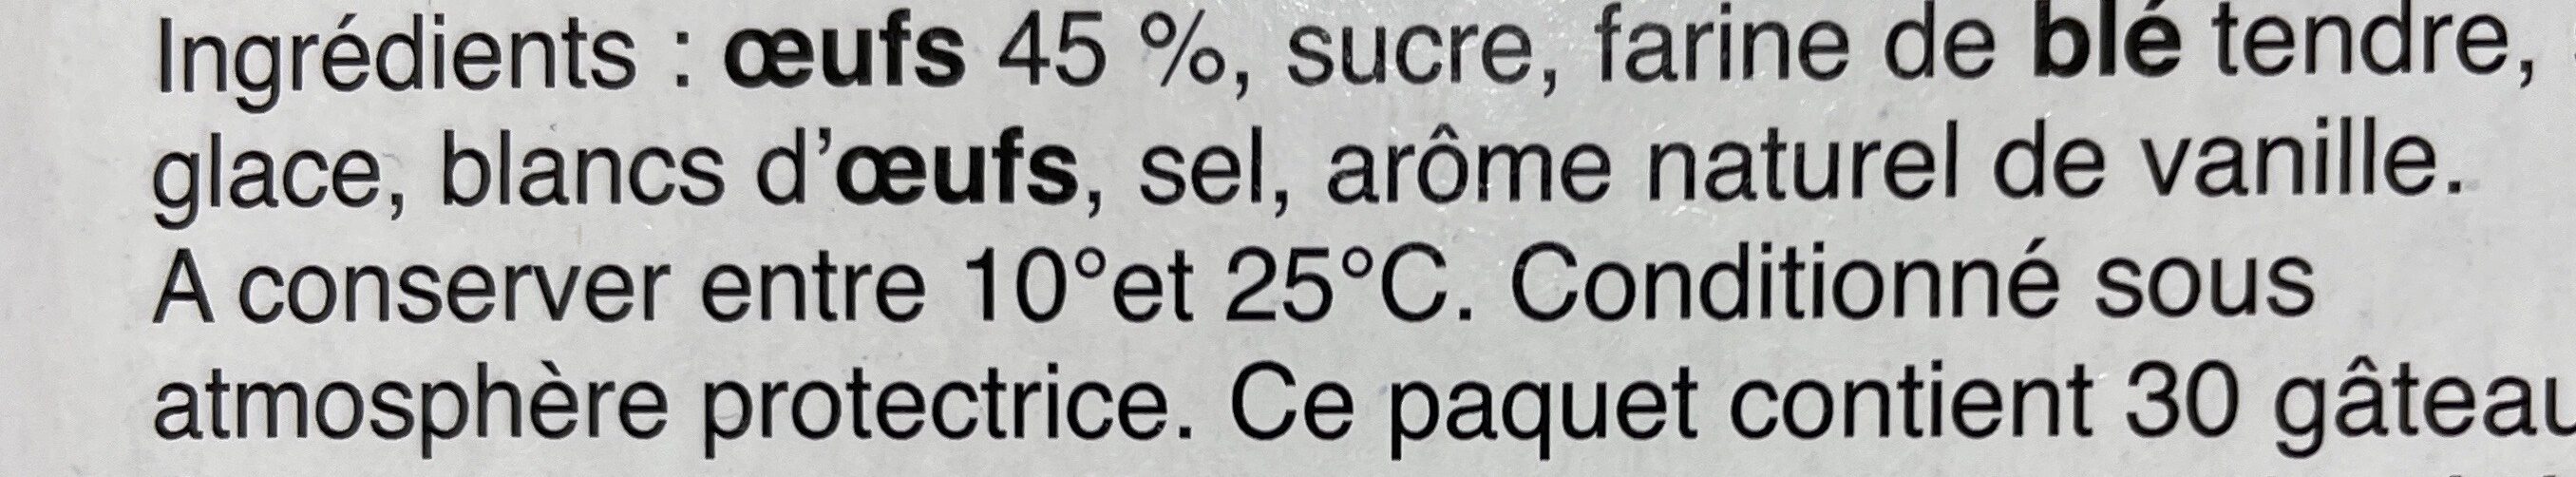 BISCUITS A LA CUILLERE - Ingredientes - fr